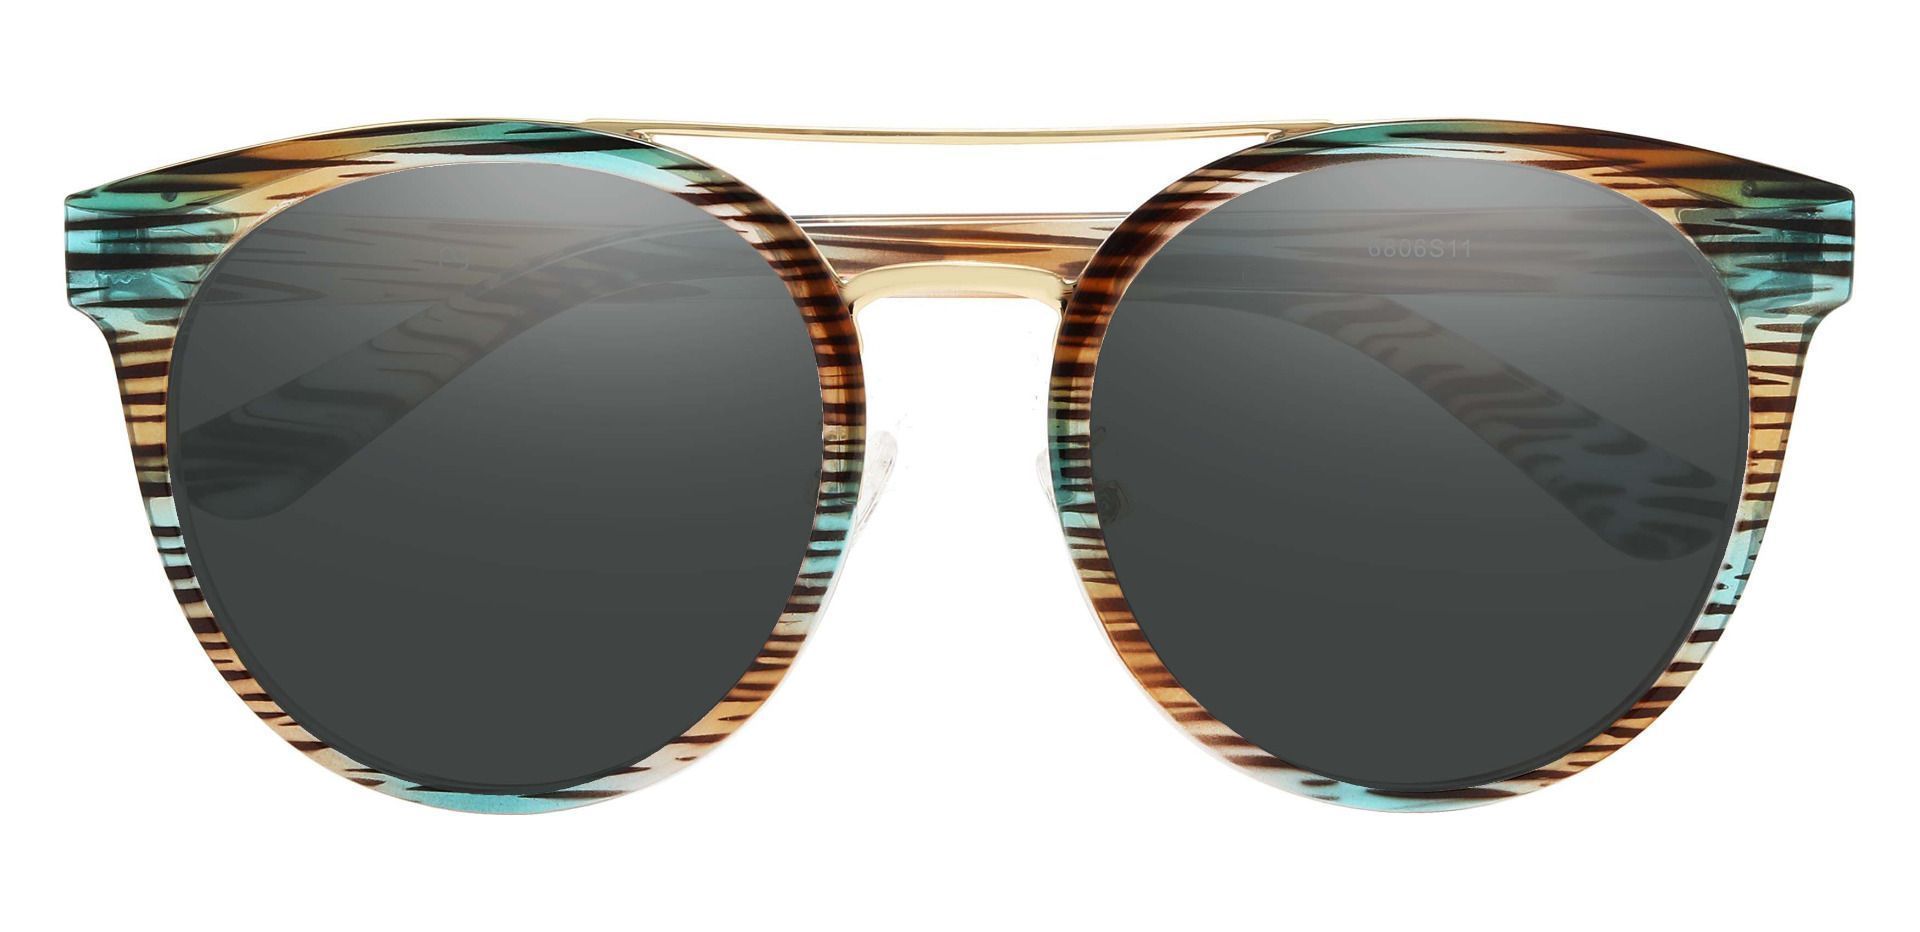 Oasis Aviator Prescription Sunglasses - Striped Frame With Gray Lenses